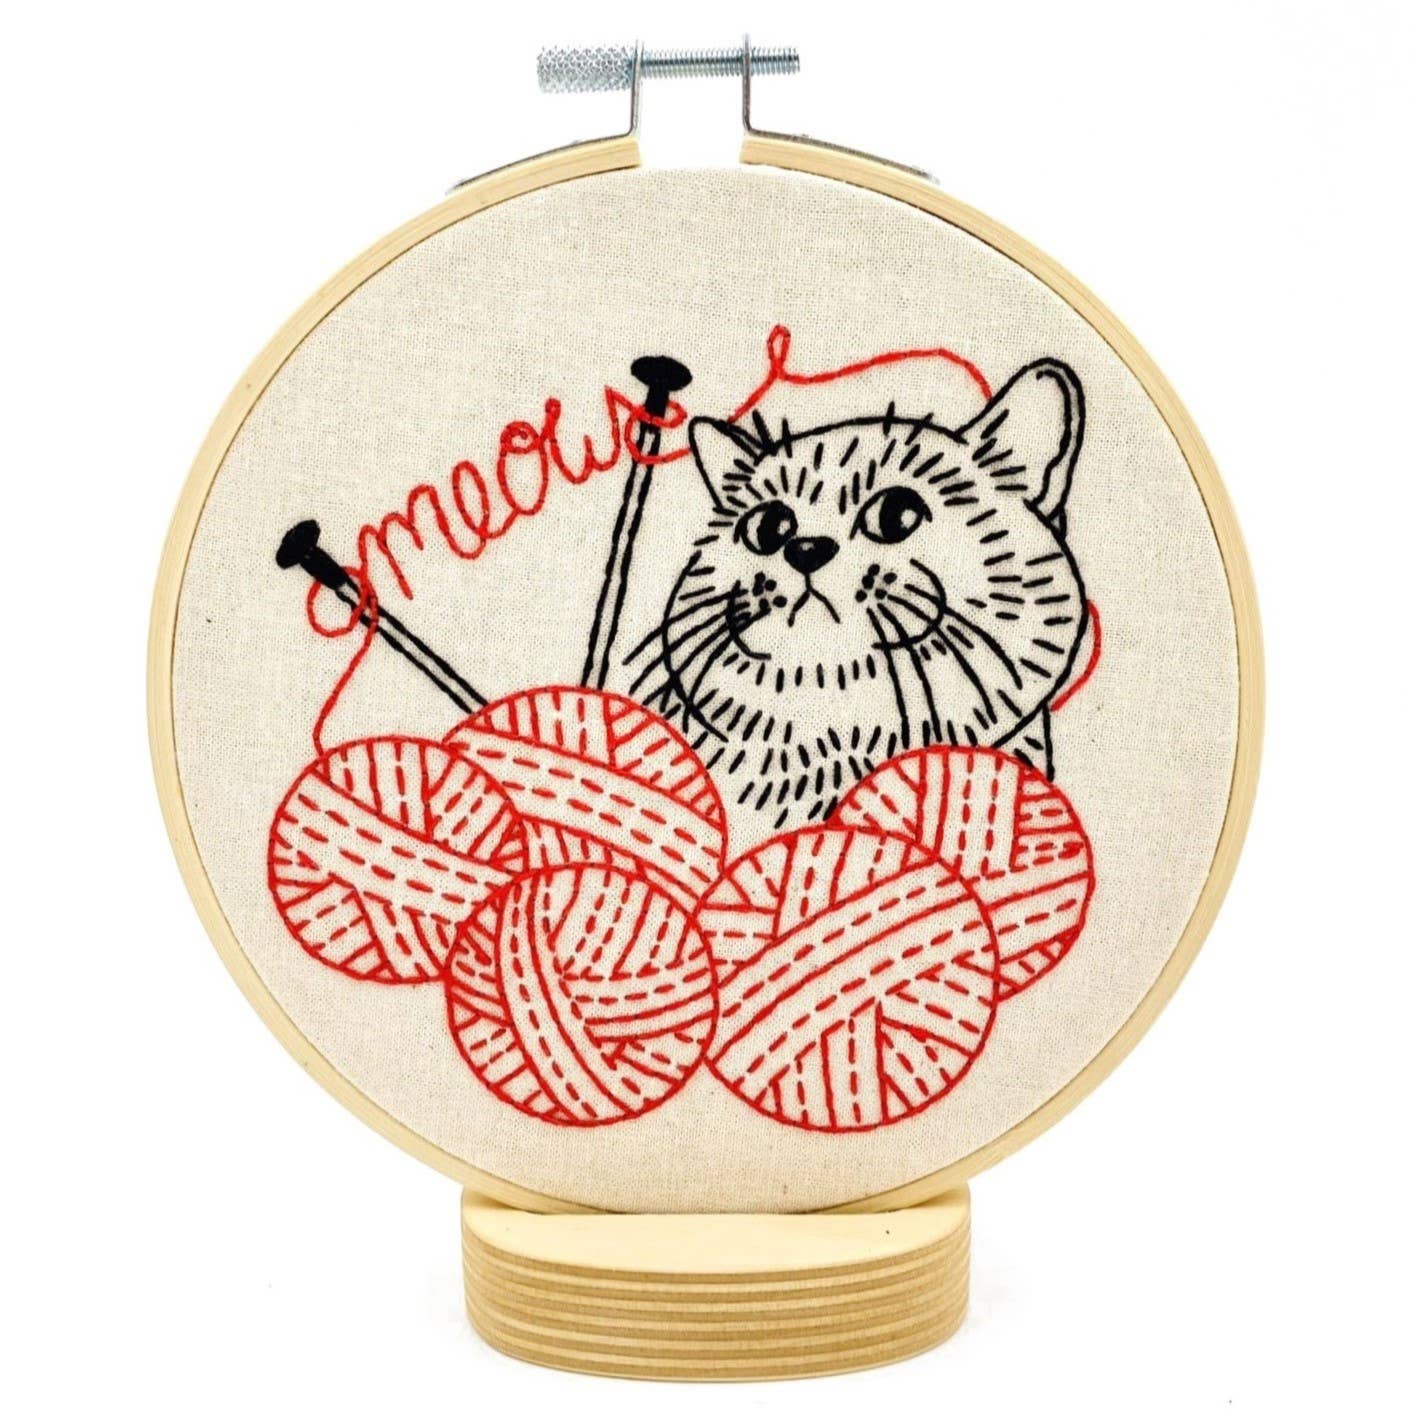 Knitting Kitten Complete Embroidery Kit